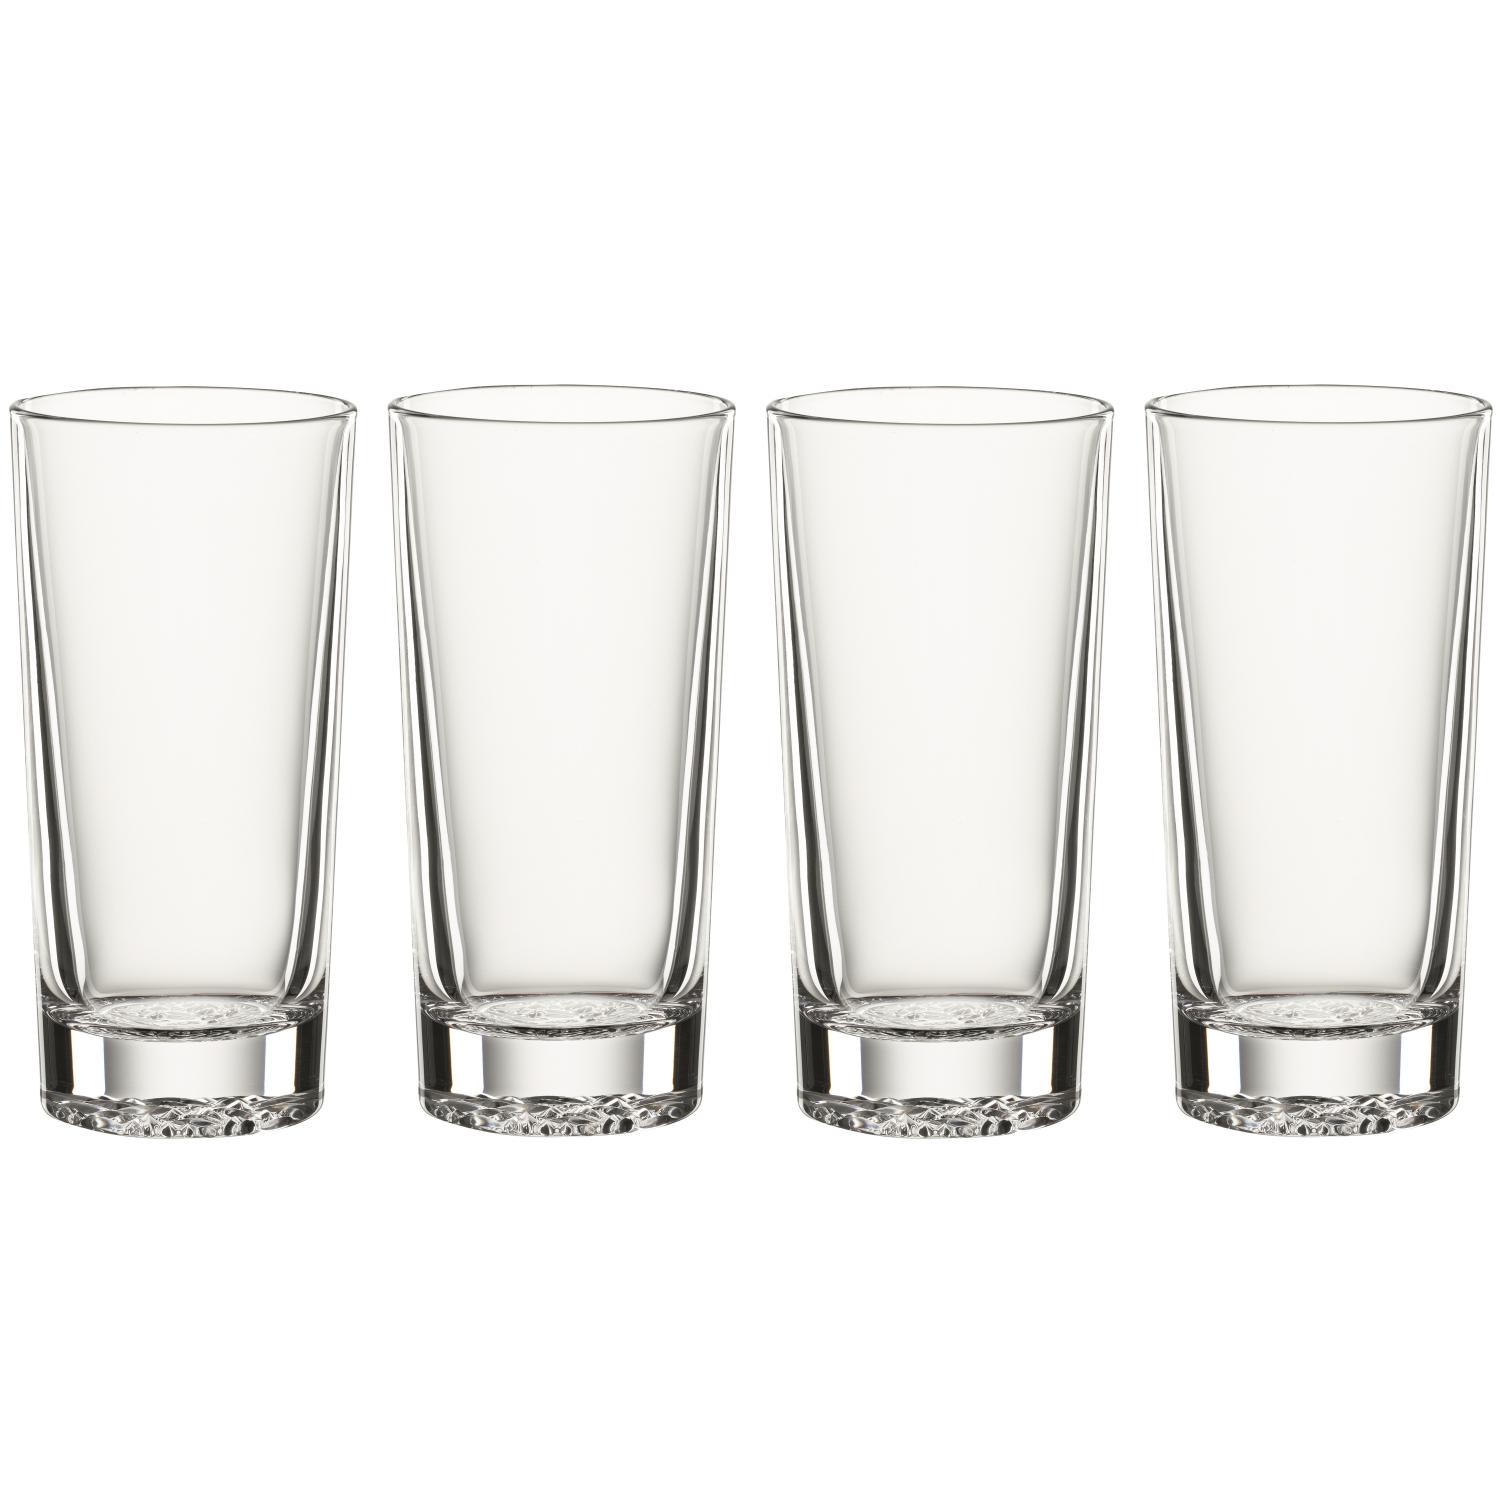 4 стакана для коктейлей Spiegelau Lounge 2.0 Longdrink 305 мл (арт. 2710162)